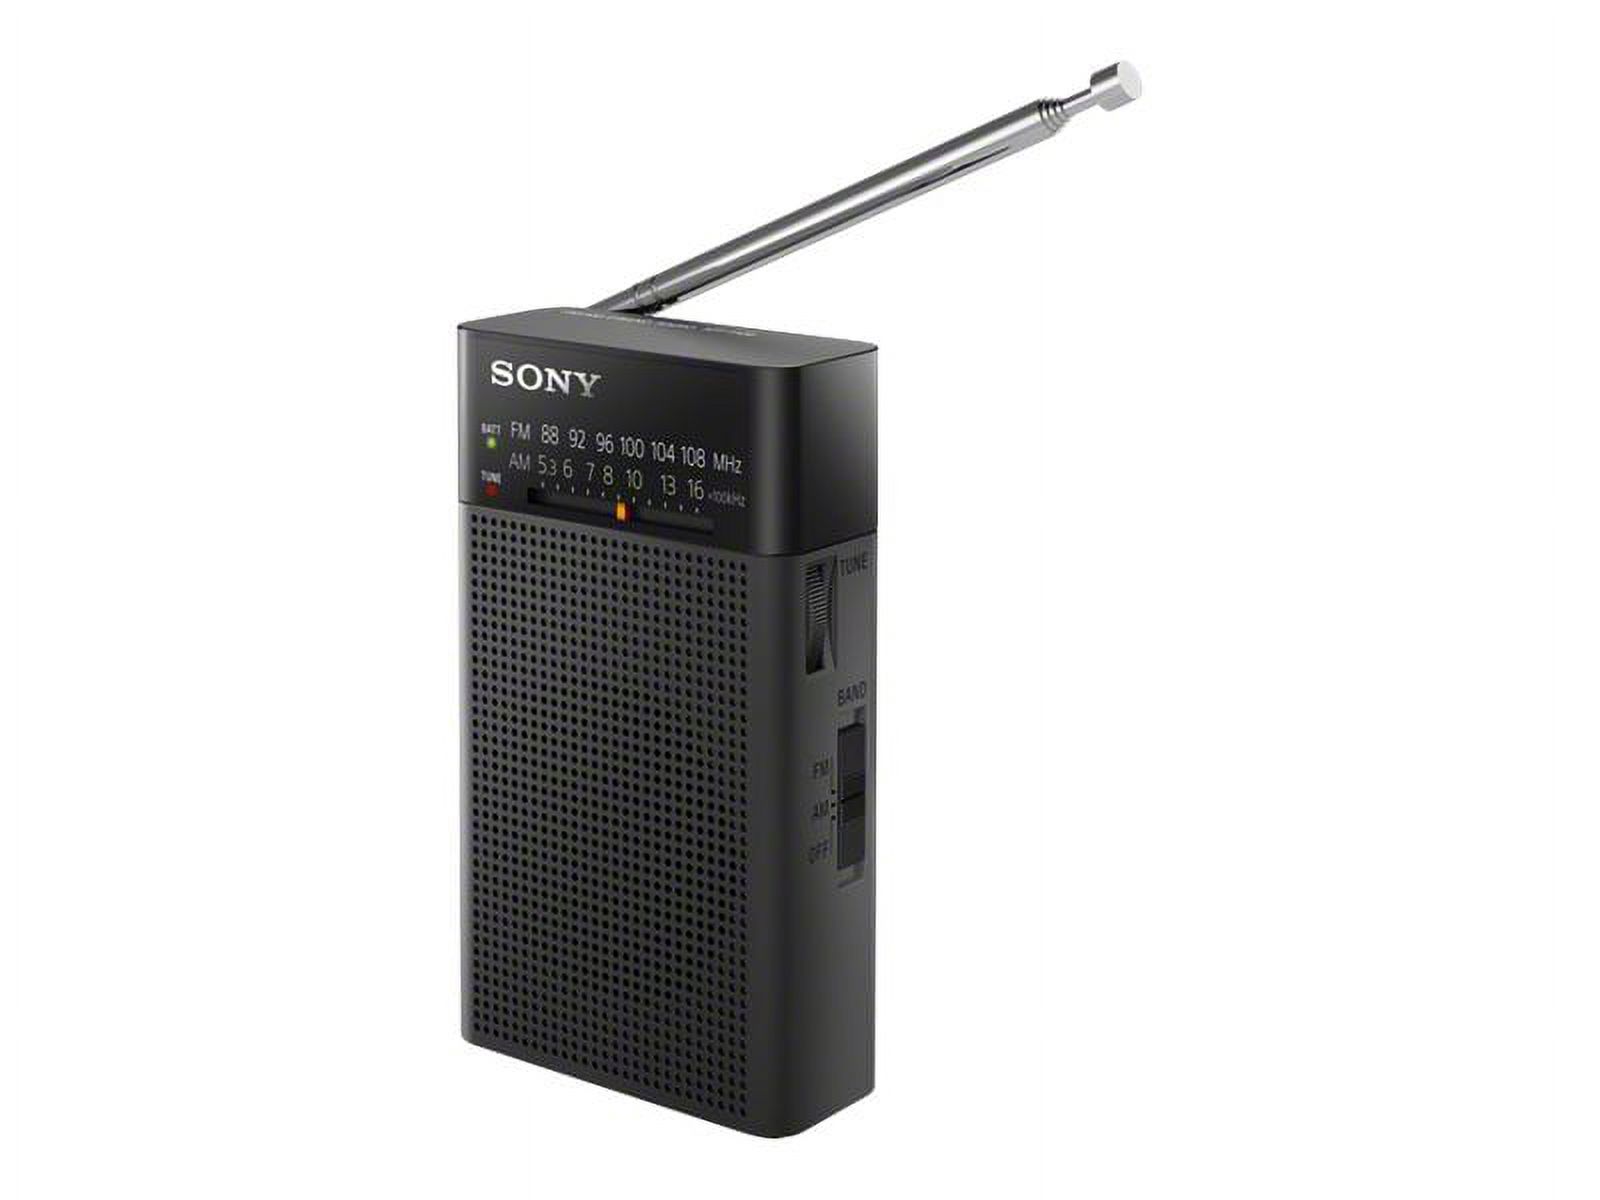 Sony Portable AM/FM Radio, Black, ICF-P26 - image 4 of 11